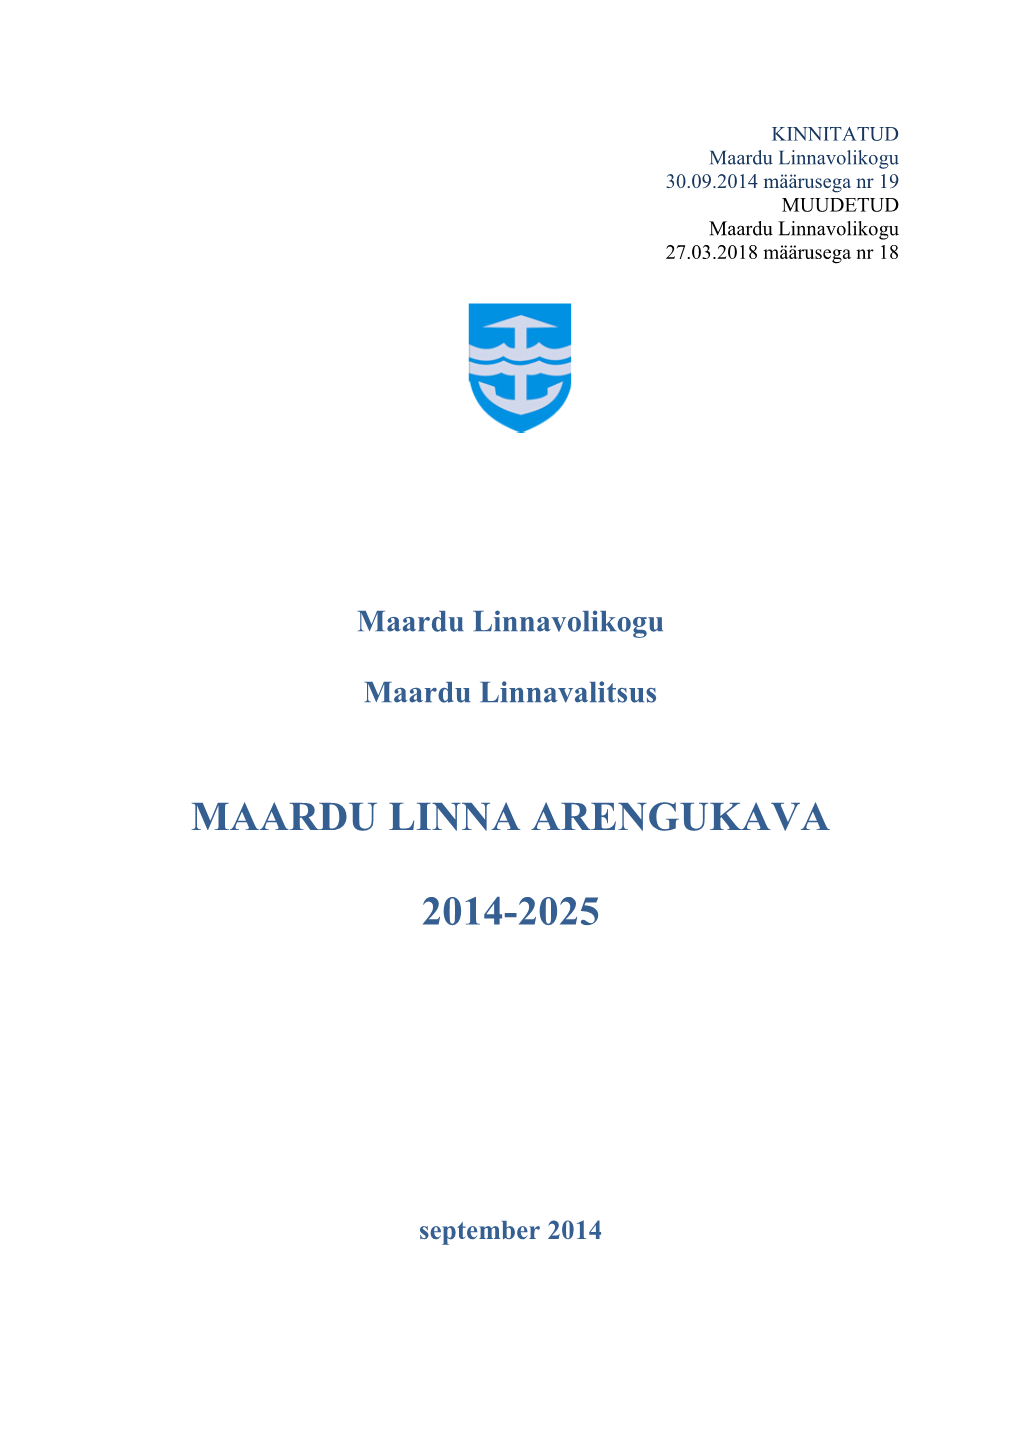 Maardu Linna Arengukava 2014-2025